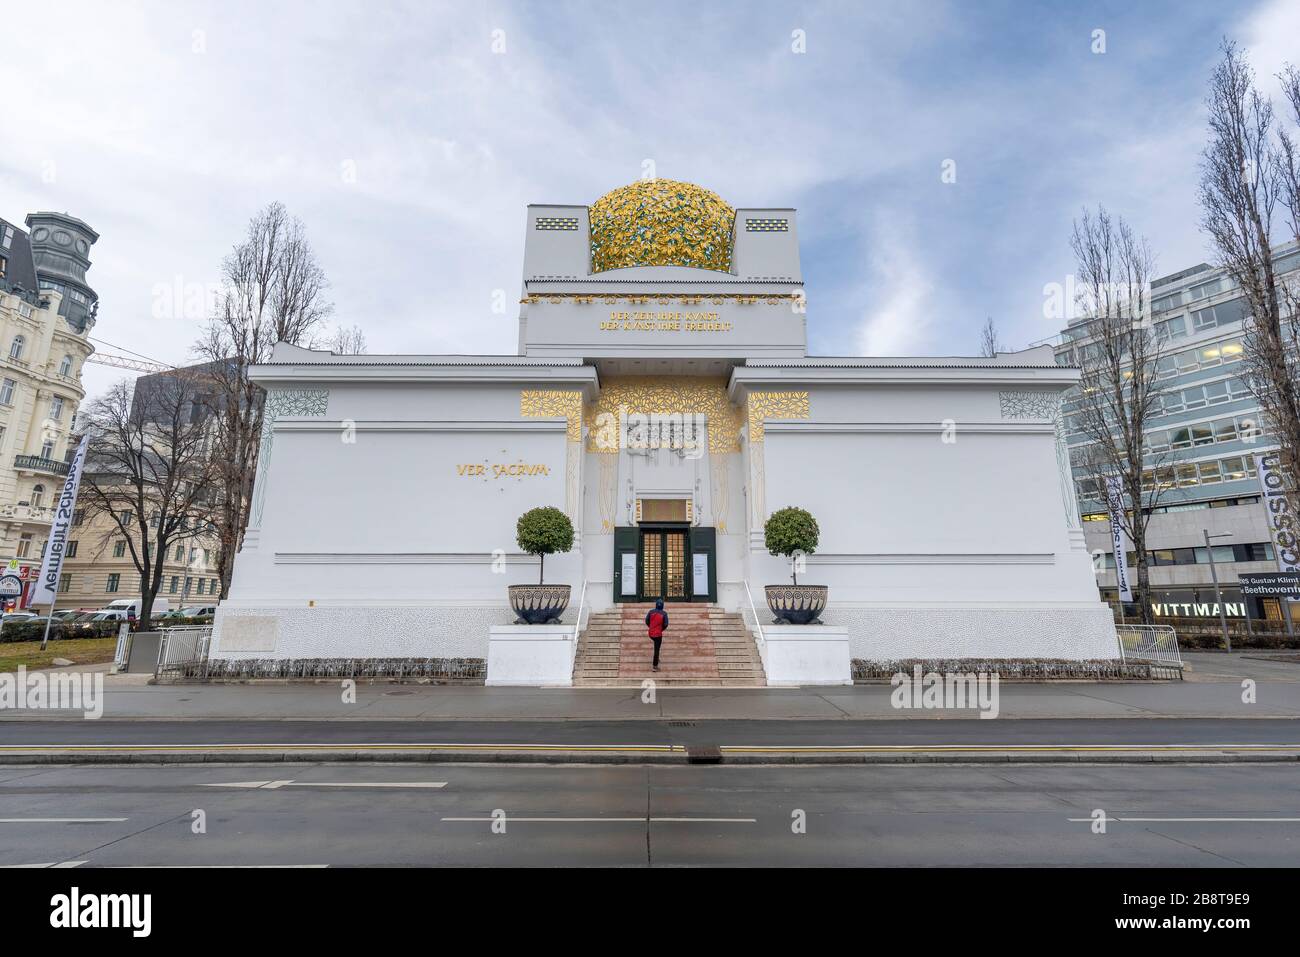 Vienna, Austria. The Secession Building, Wiener Secessionsgebaude - exhibition hall Contemporary Art built in 1897 by Joseph Maria Olbrich Stock Photo